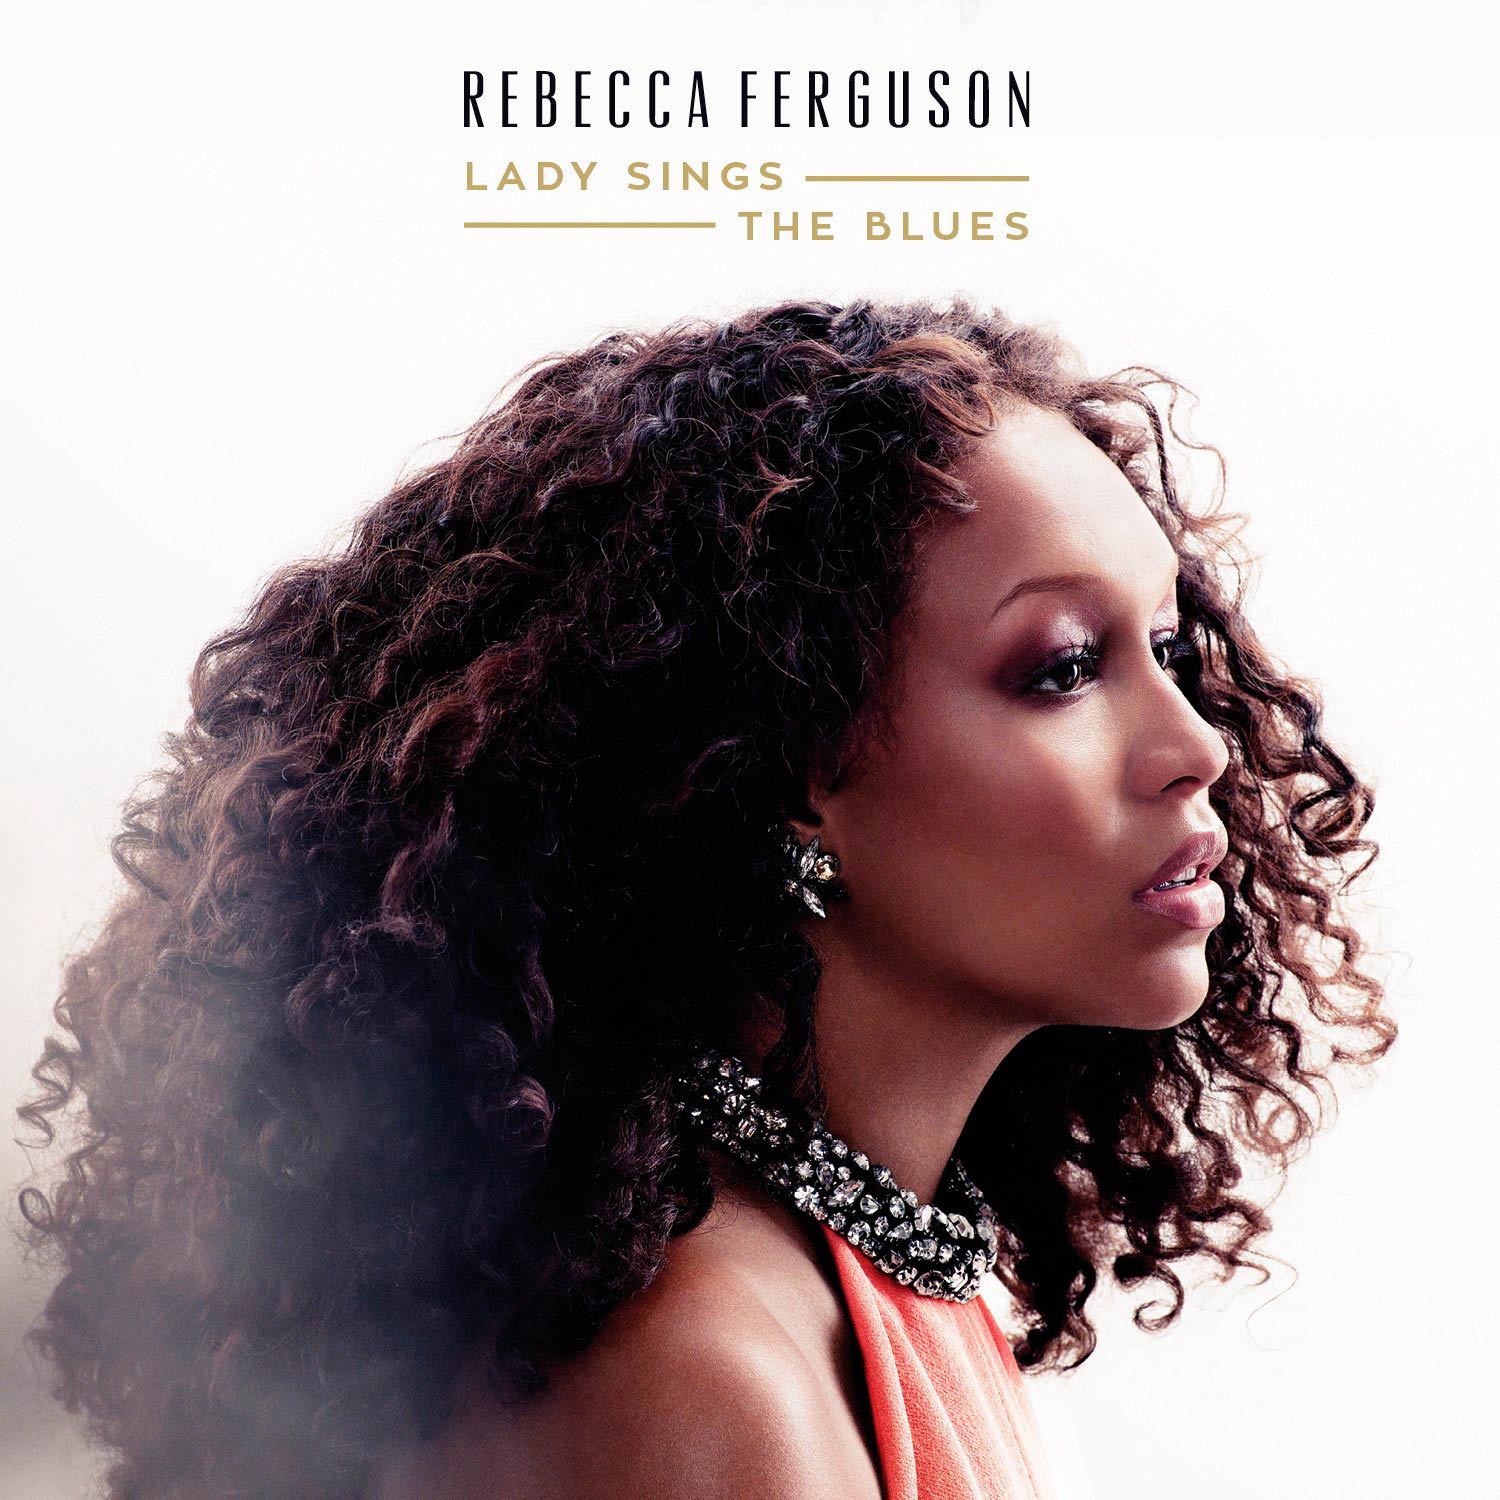 Rebecca Ferguson: Lady sings the blues, la portada del disco1500 x 1500